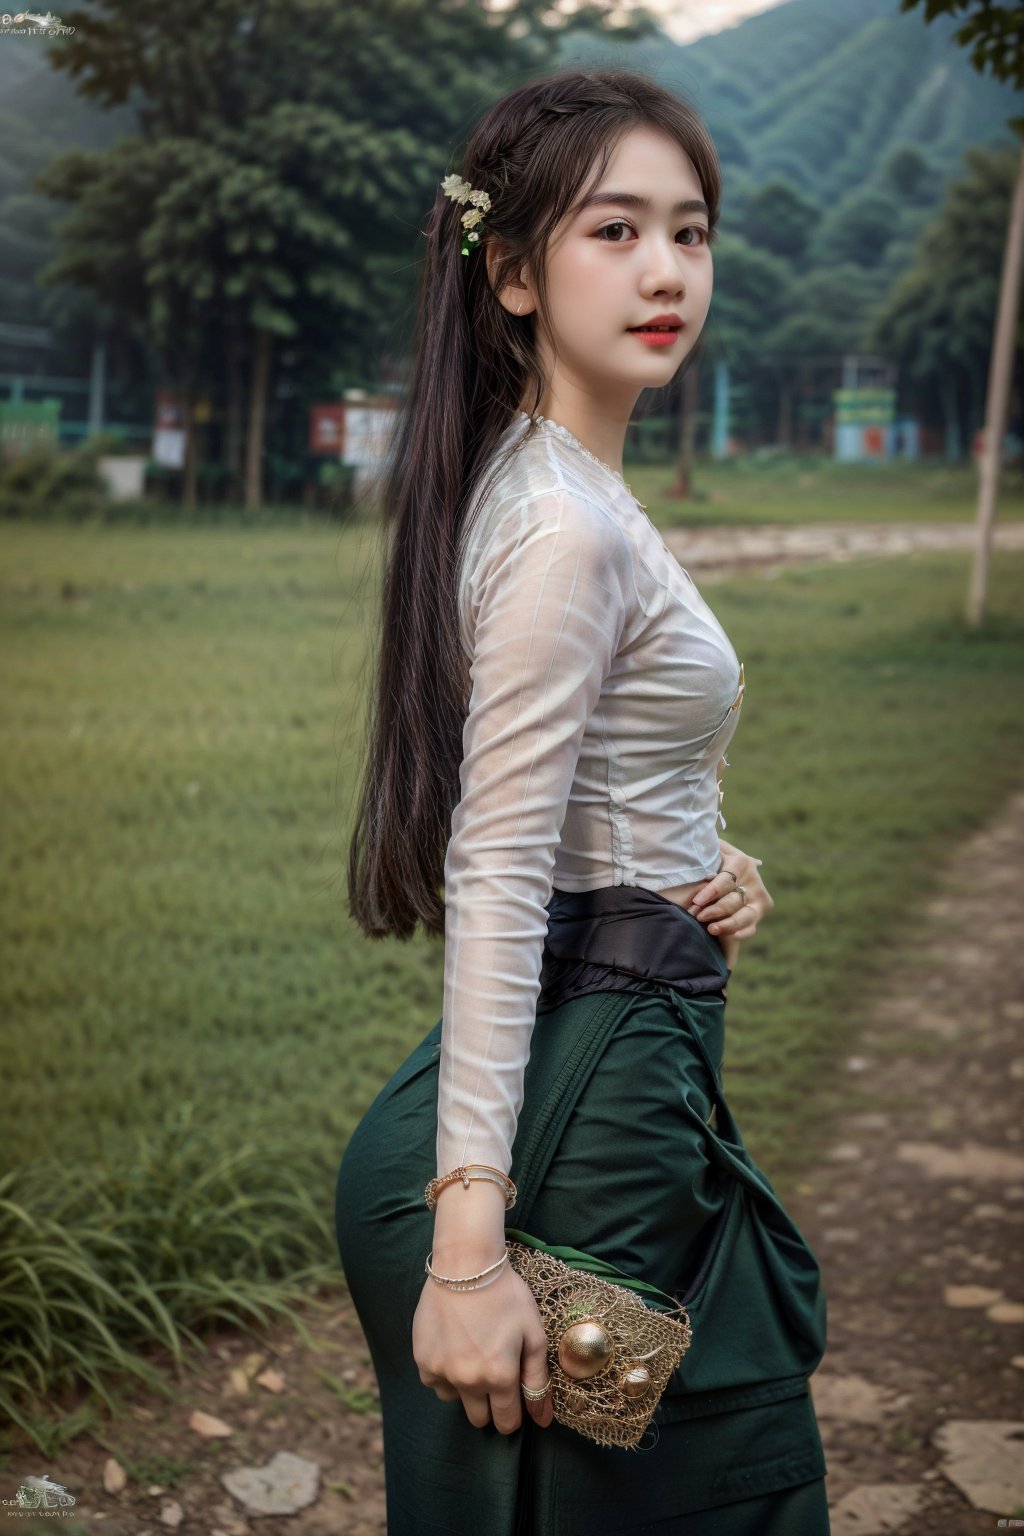 wearing acmmsayarma outfit, acmmsayarma ,Myanmar model ,long_hair,bracelet,outdoor,((green long skirt)),realistic,4k,detailed,front-view,((upper body)),road